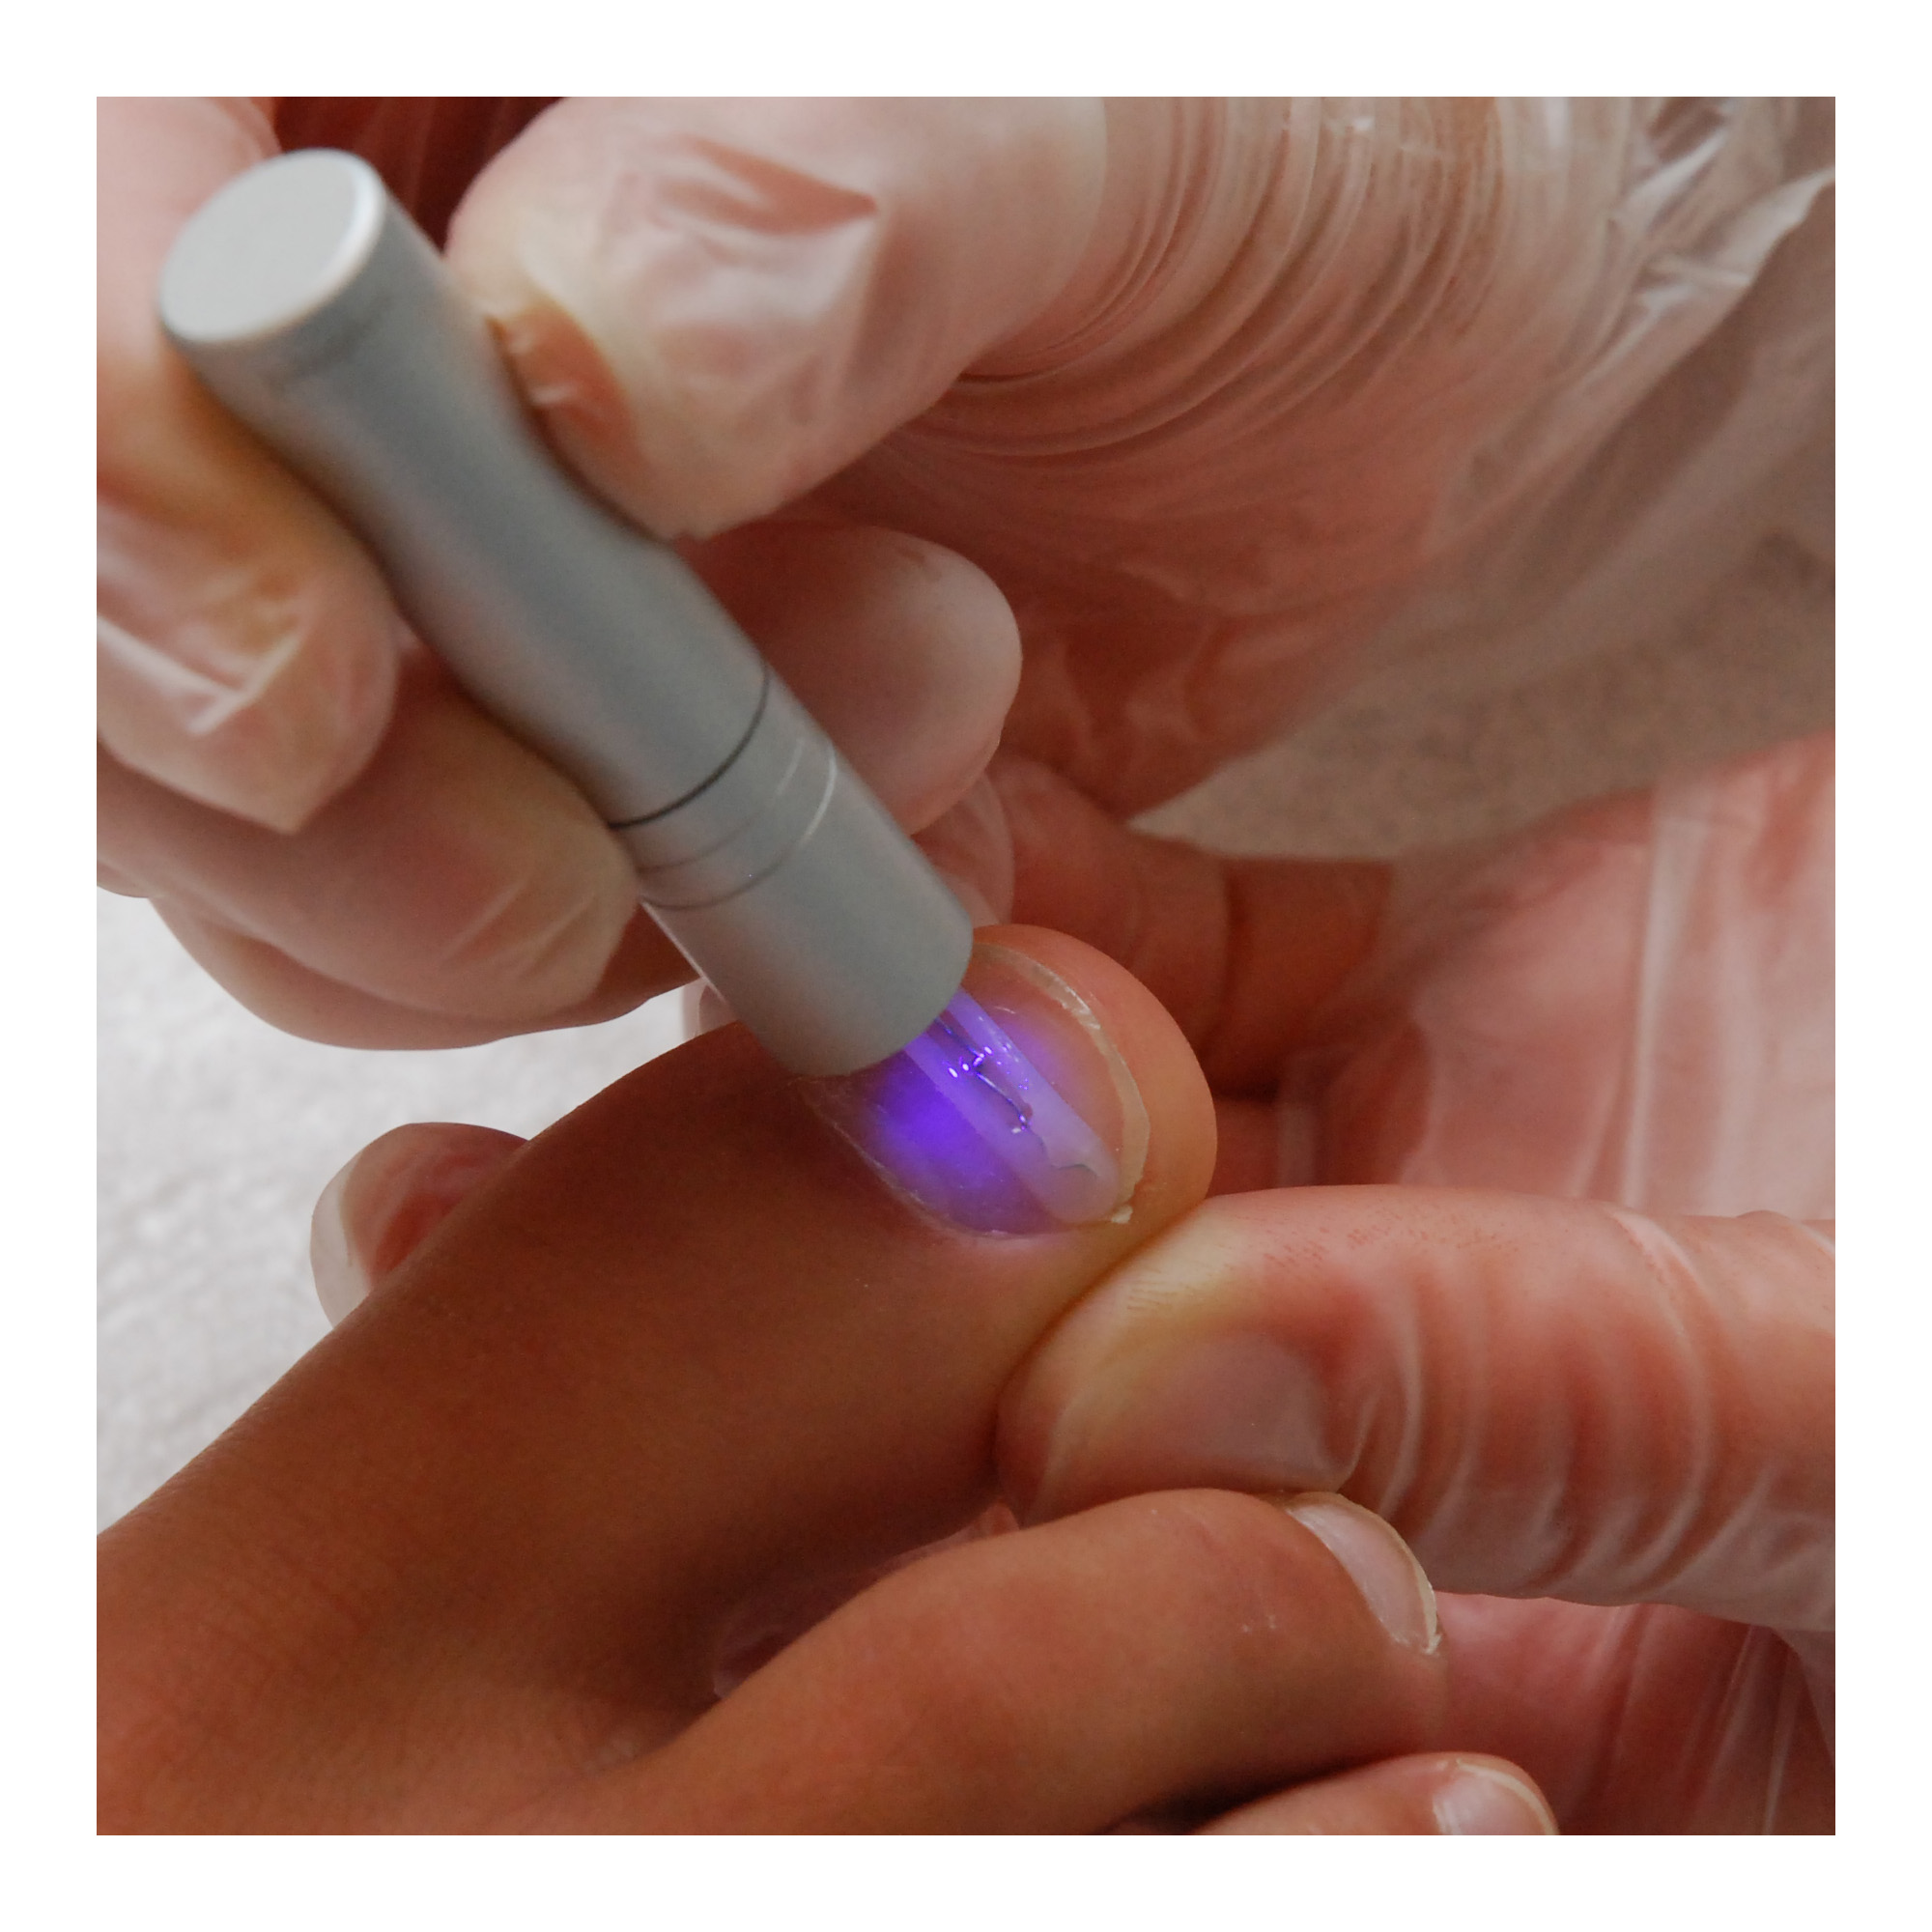 Microlampada UV per PediGel Podofix